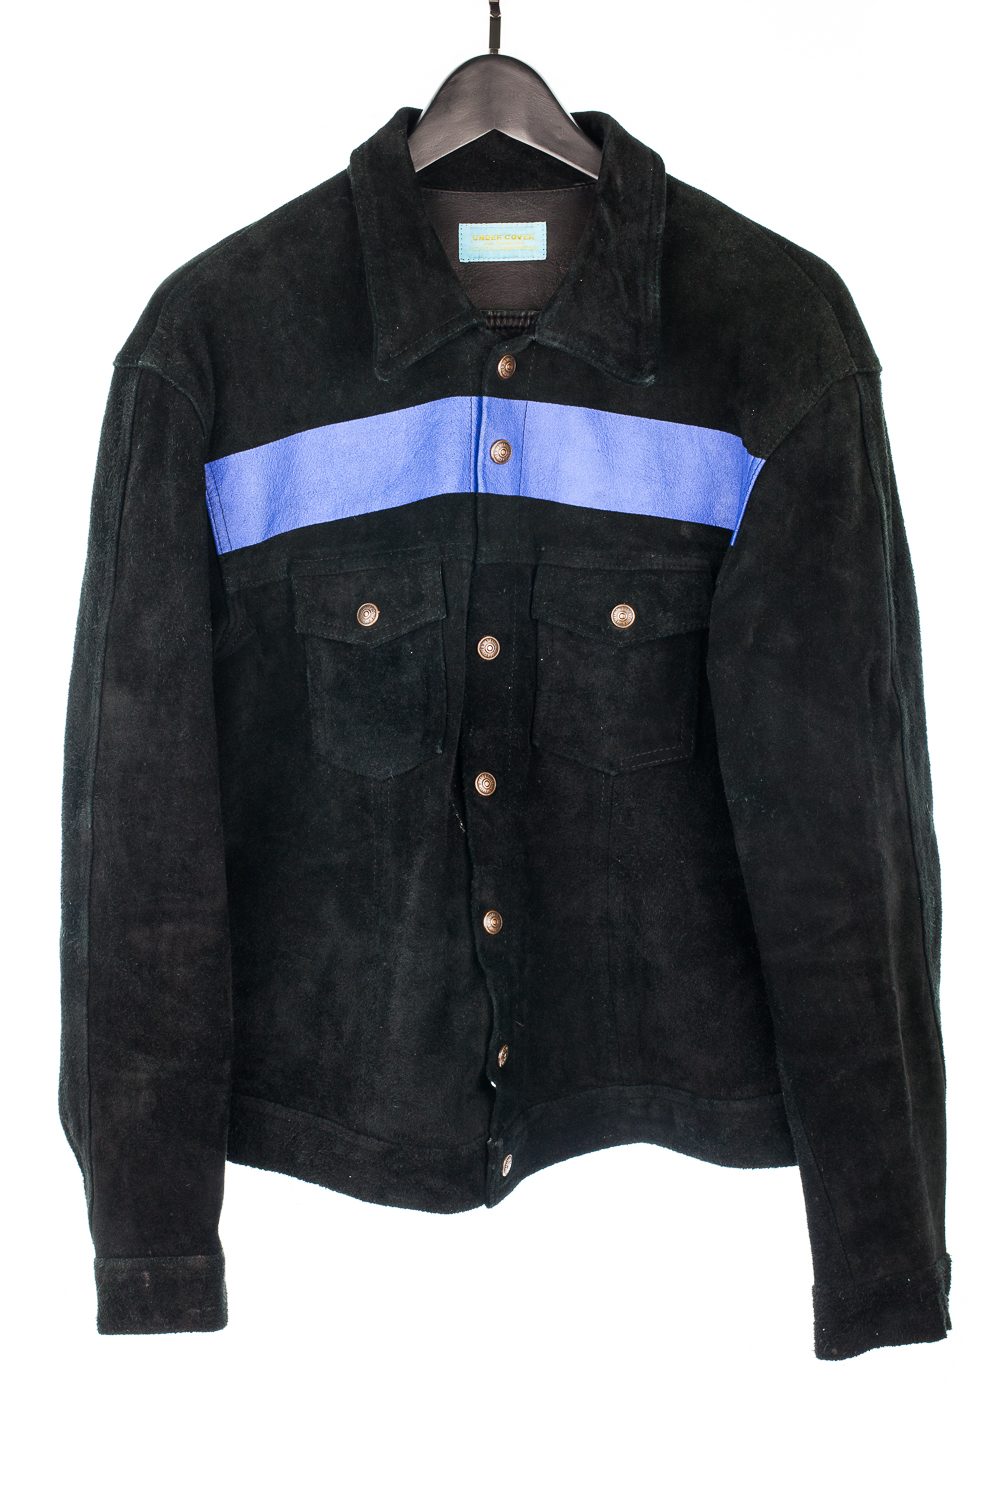 FW97 “Leaf” Suede Trucker Jacket w/ Stripe (Black)